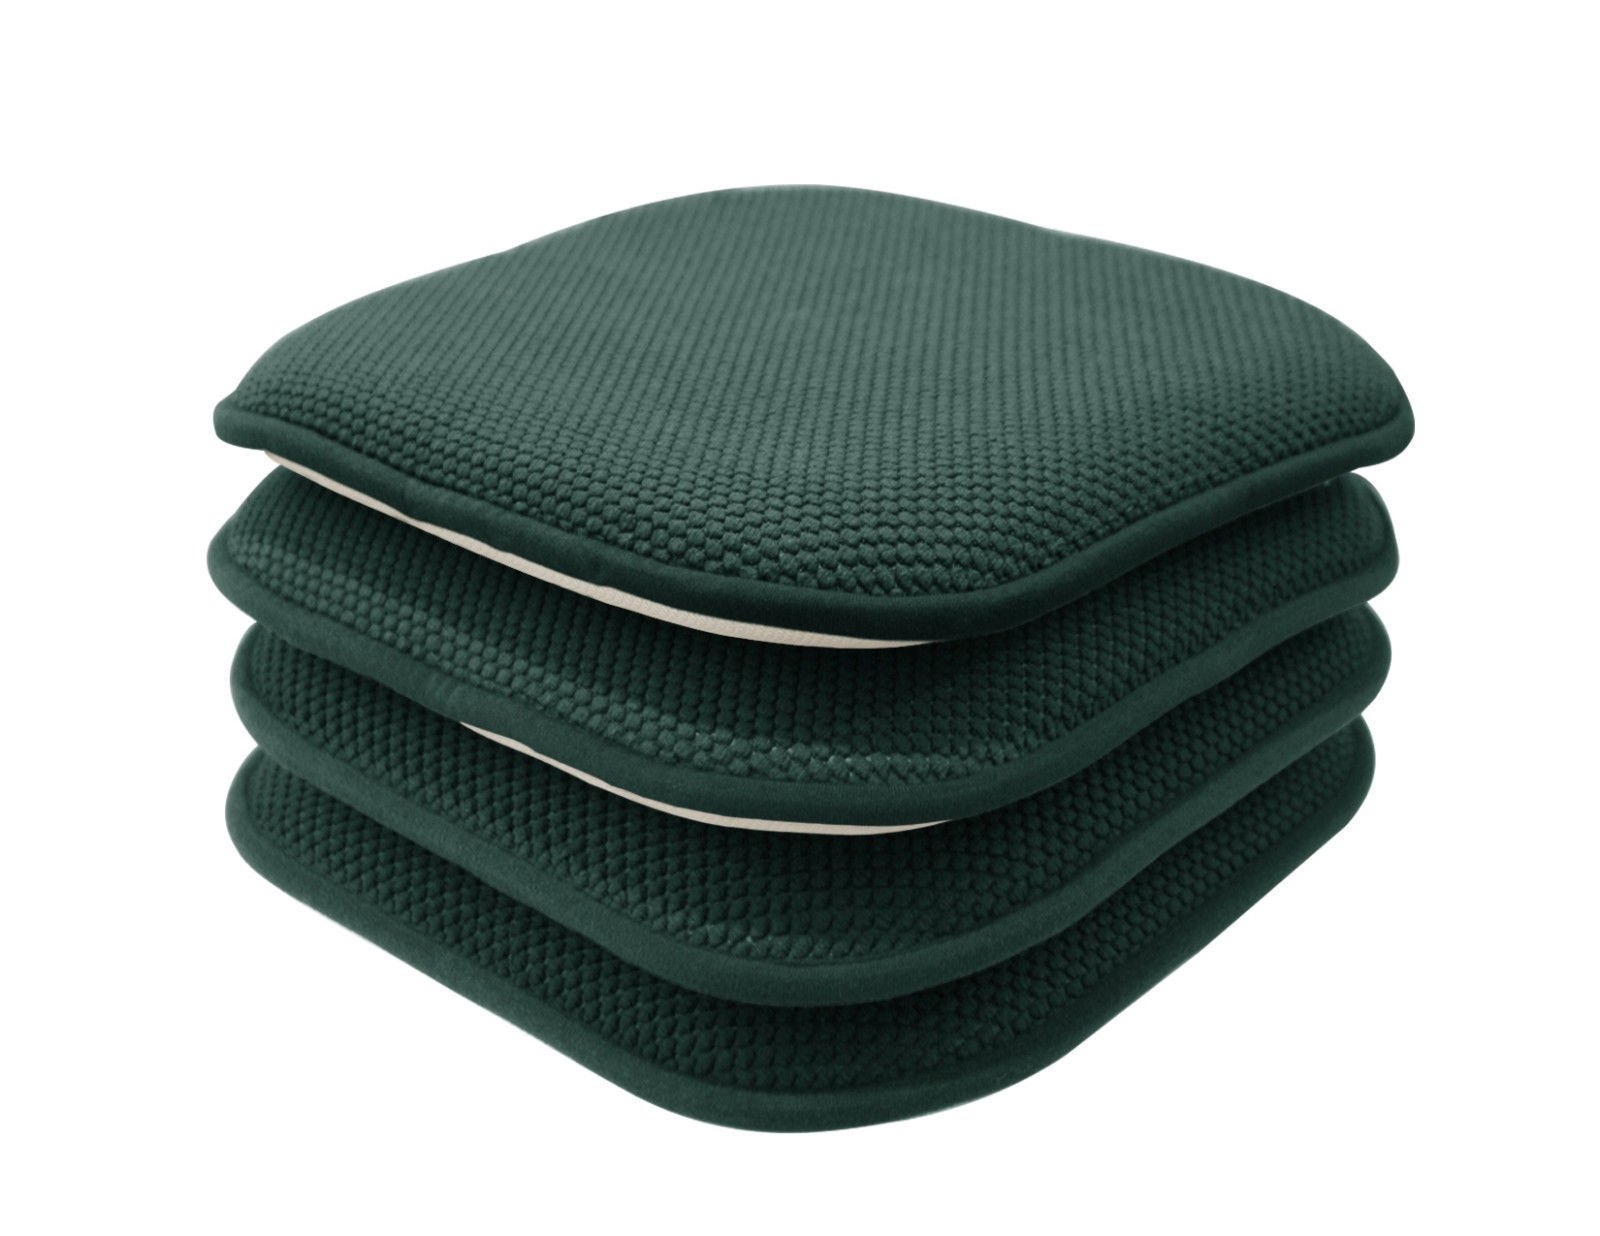 https://visualhunt.com/photos/12/goodgram-4-pack-non-slip-honeycomb-premium-comfort-memory-foam-chair-pads-cushions-assorted-colors.jpg